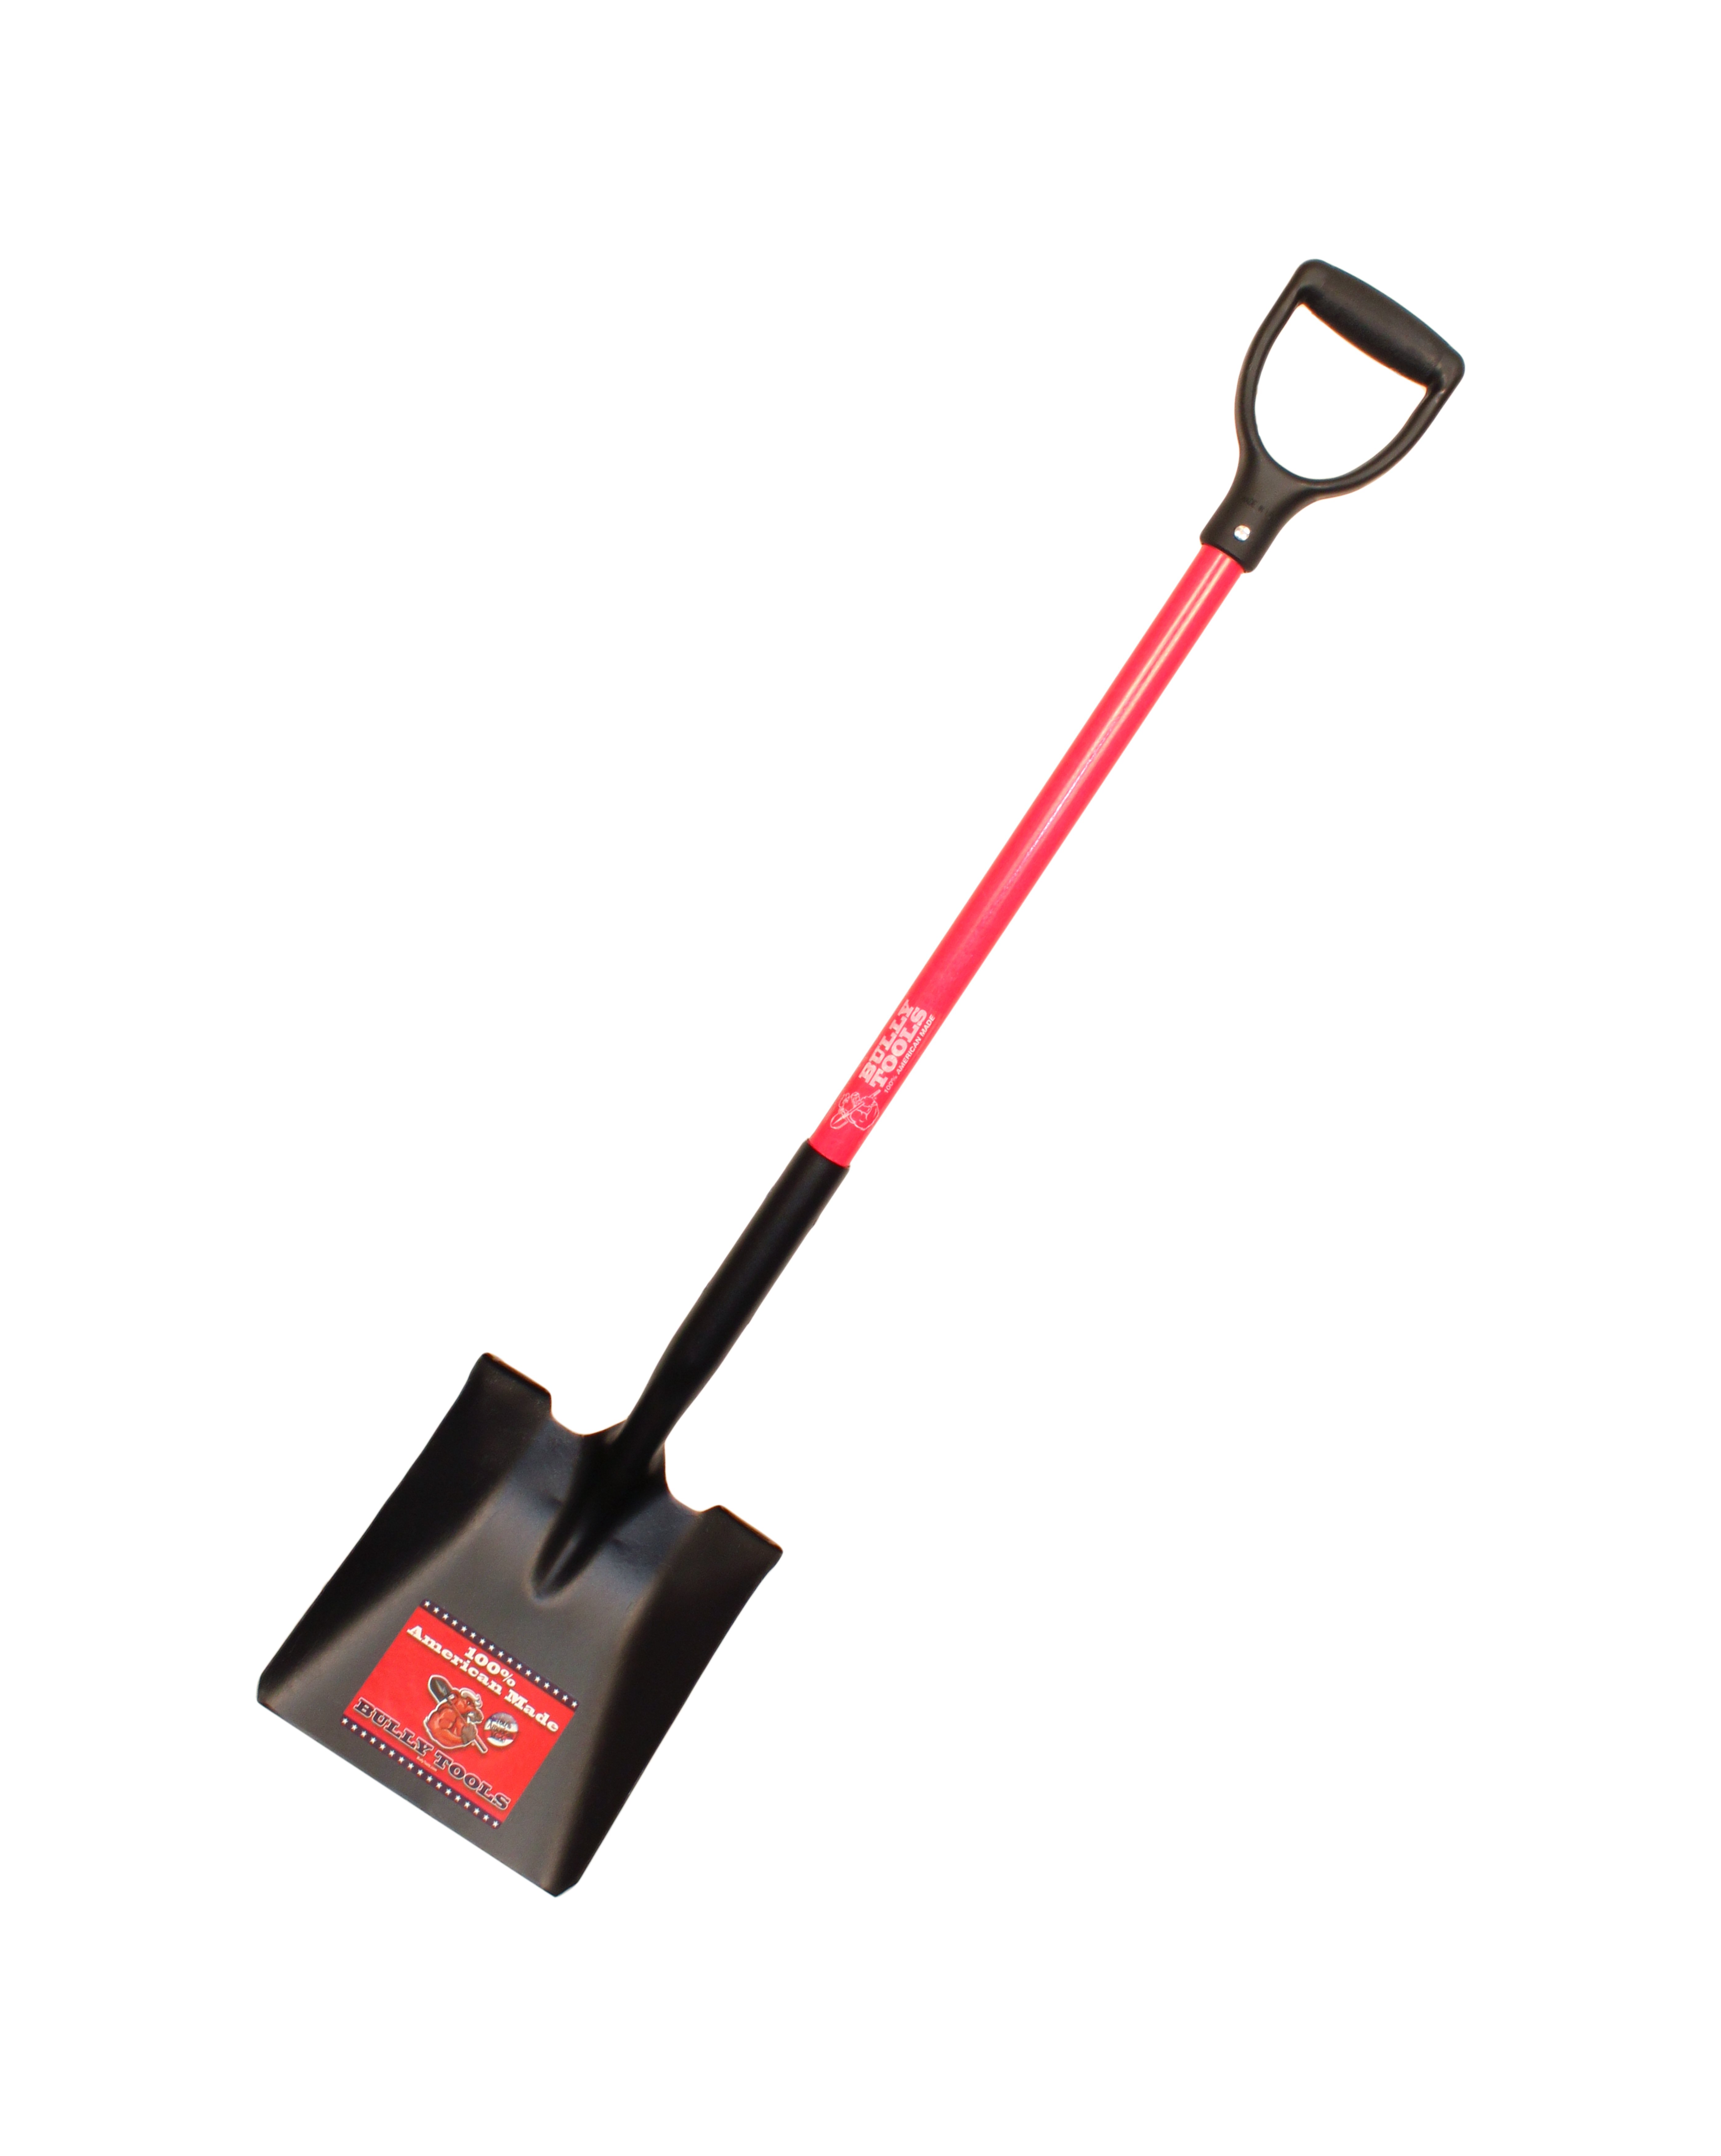 Bully Tools 14 Gauge Square Point Shovel, Fiberglass D-Grip Handle - 82520